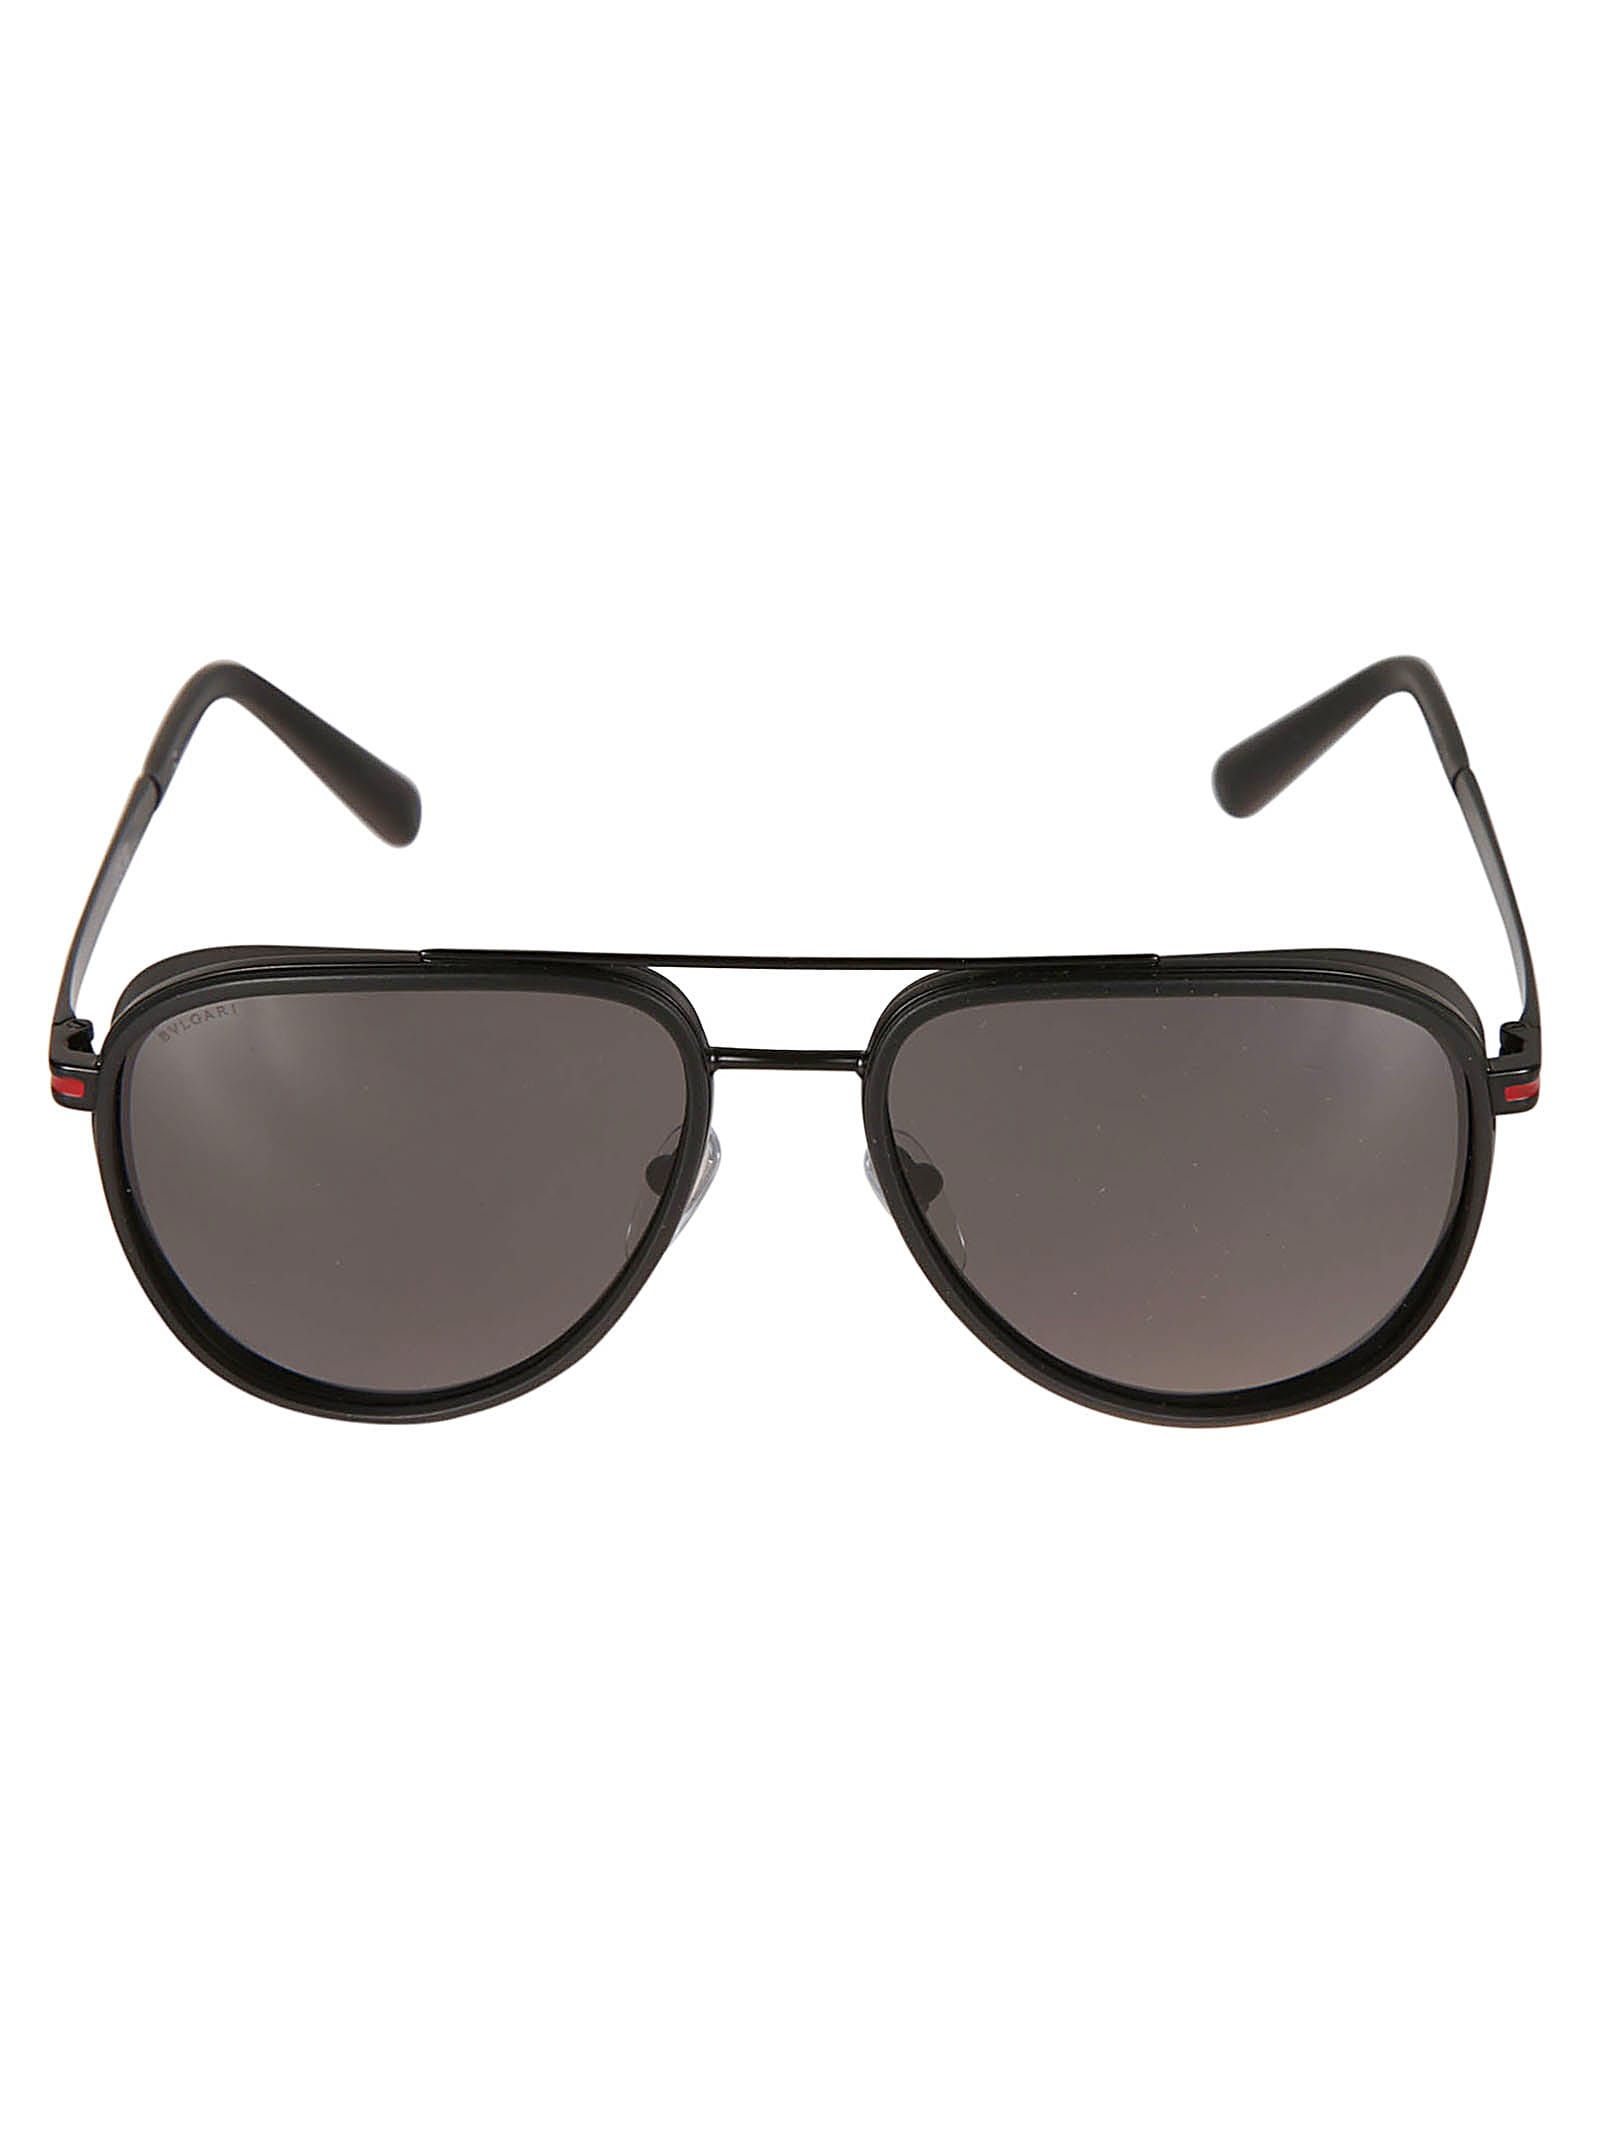 Bulgari Sole Sunglasses In Black